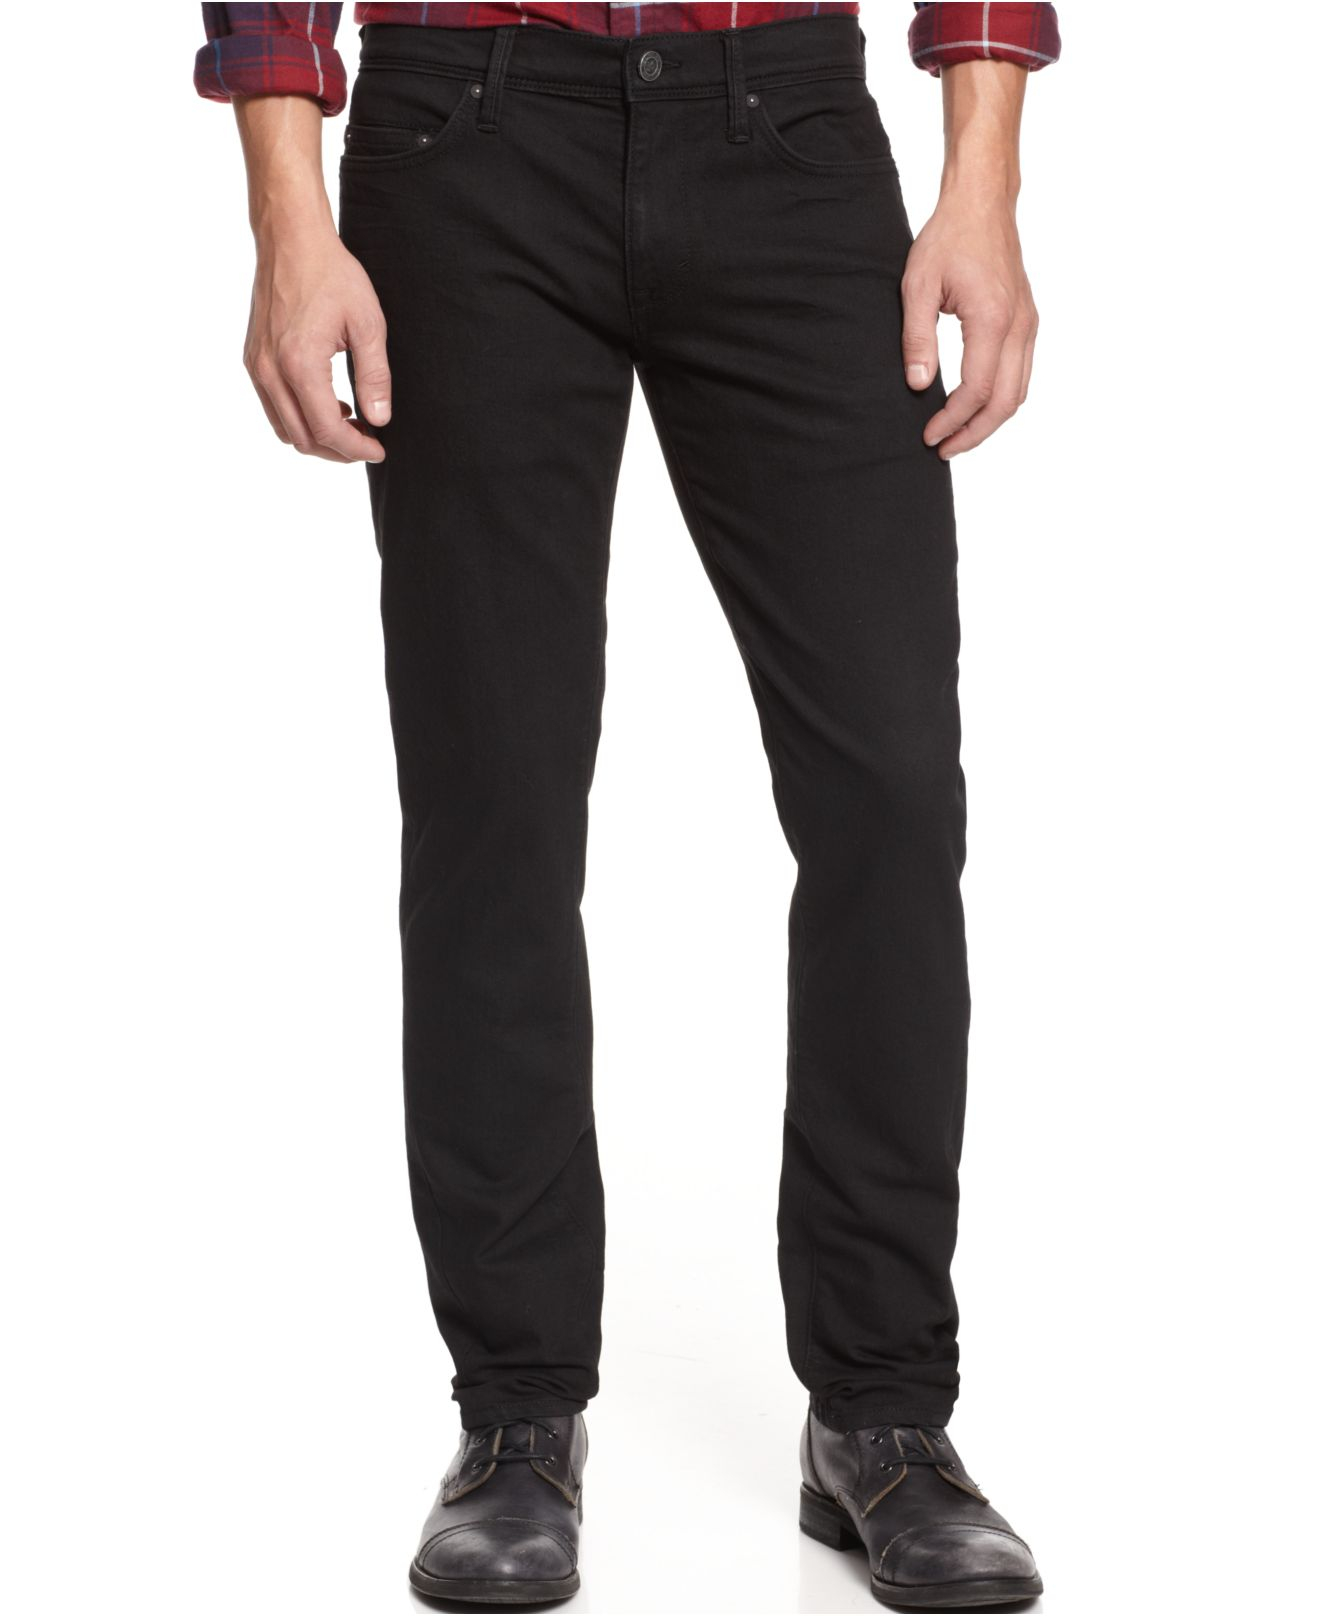 Lyst - Dkny Dkny Williamsburg Black-wash Skinny Fit Jeans in Black for Men